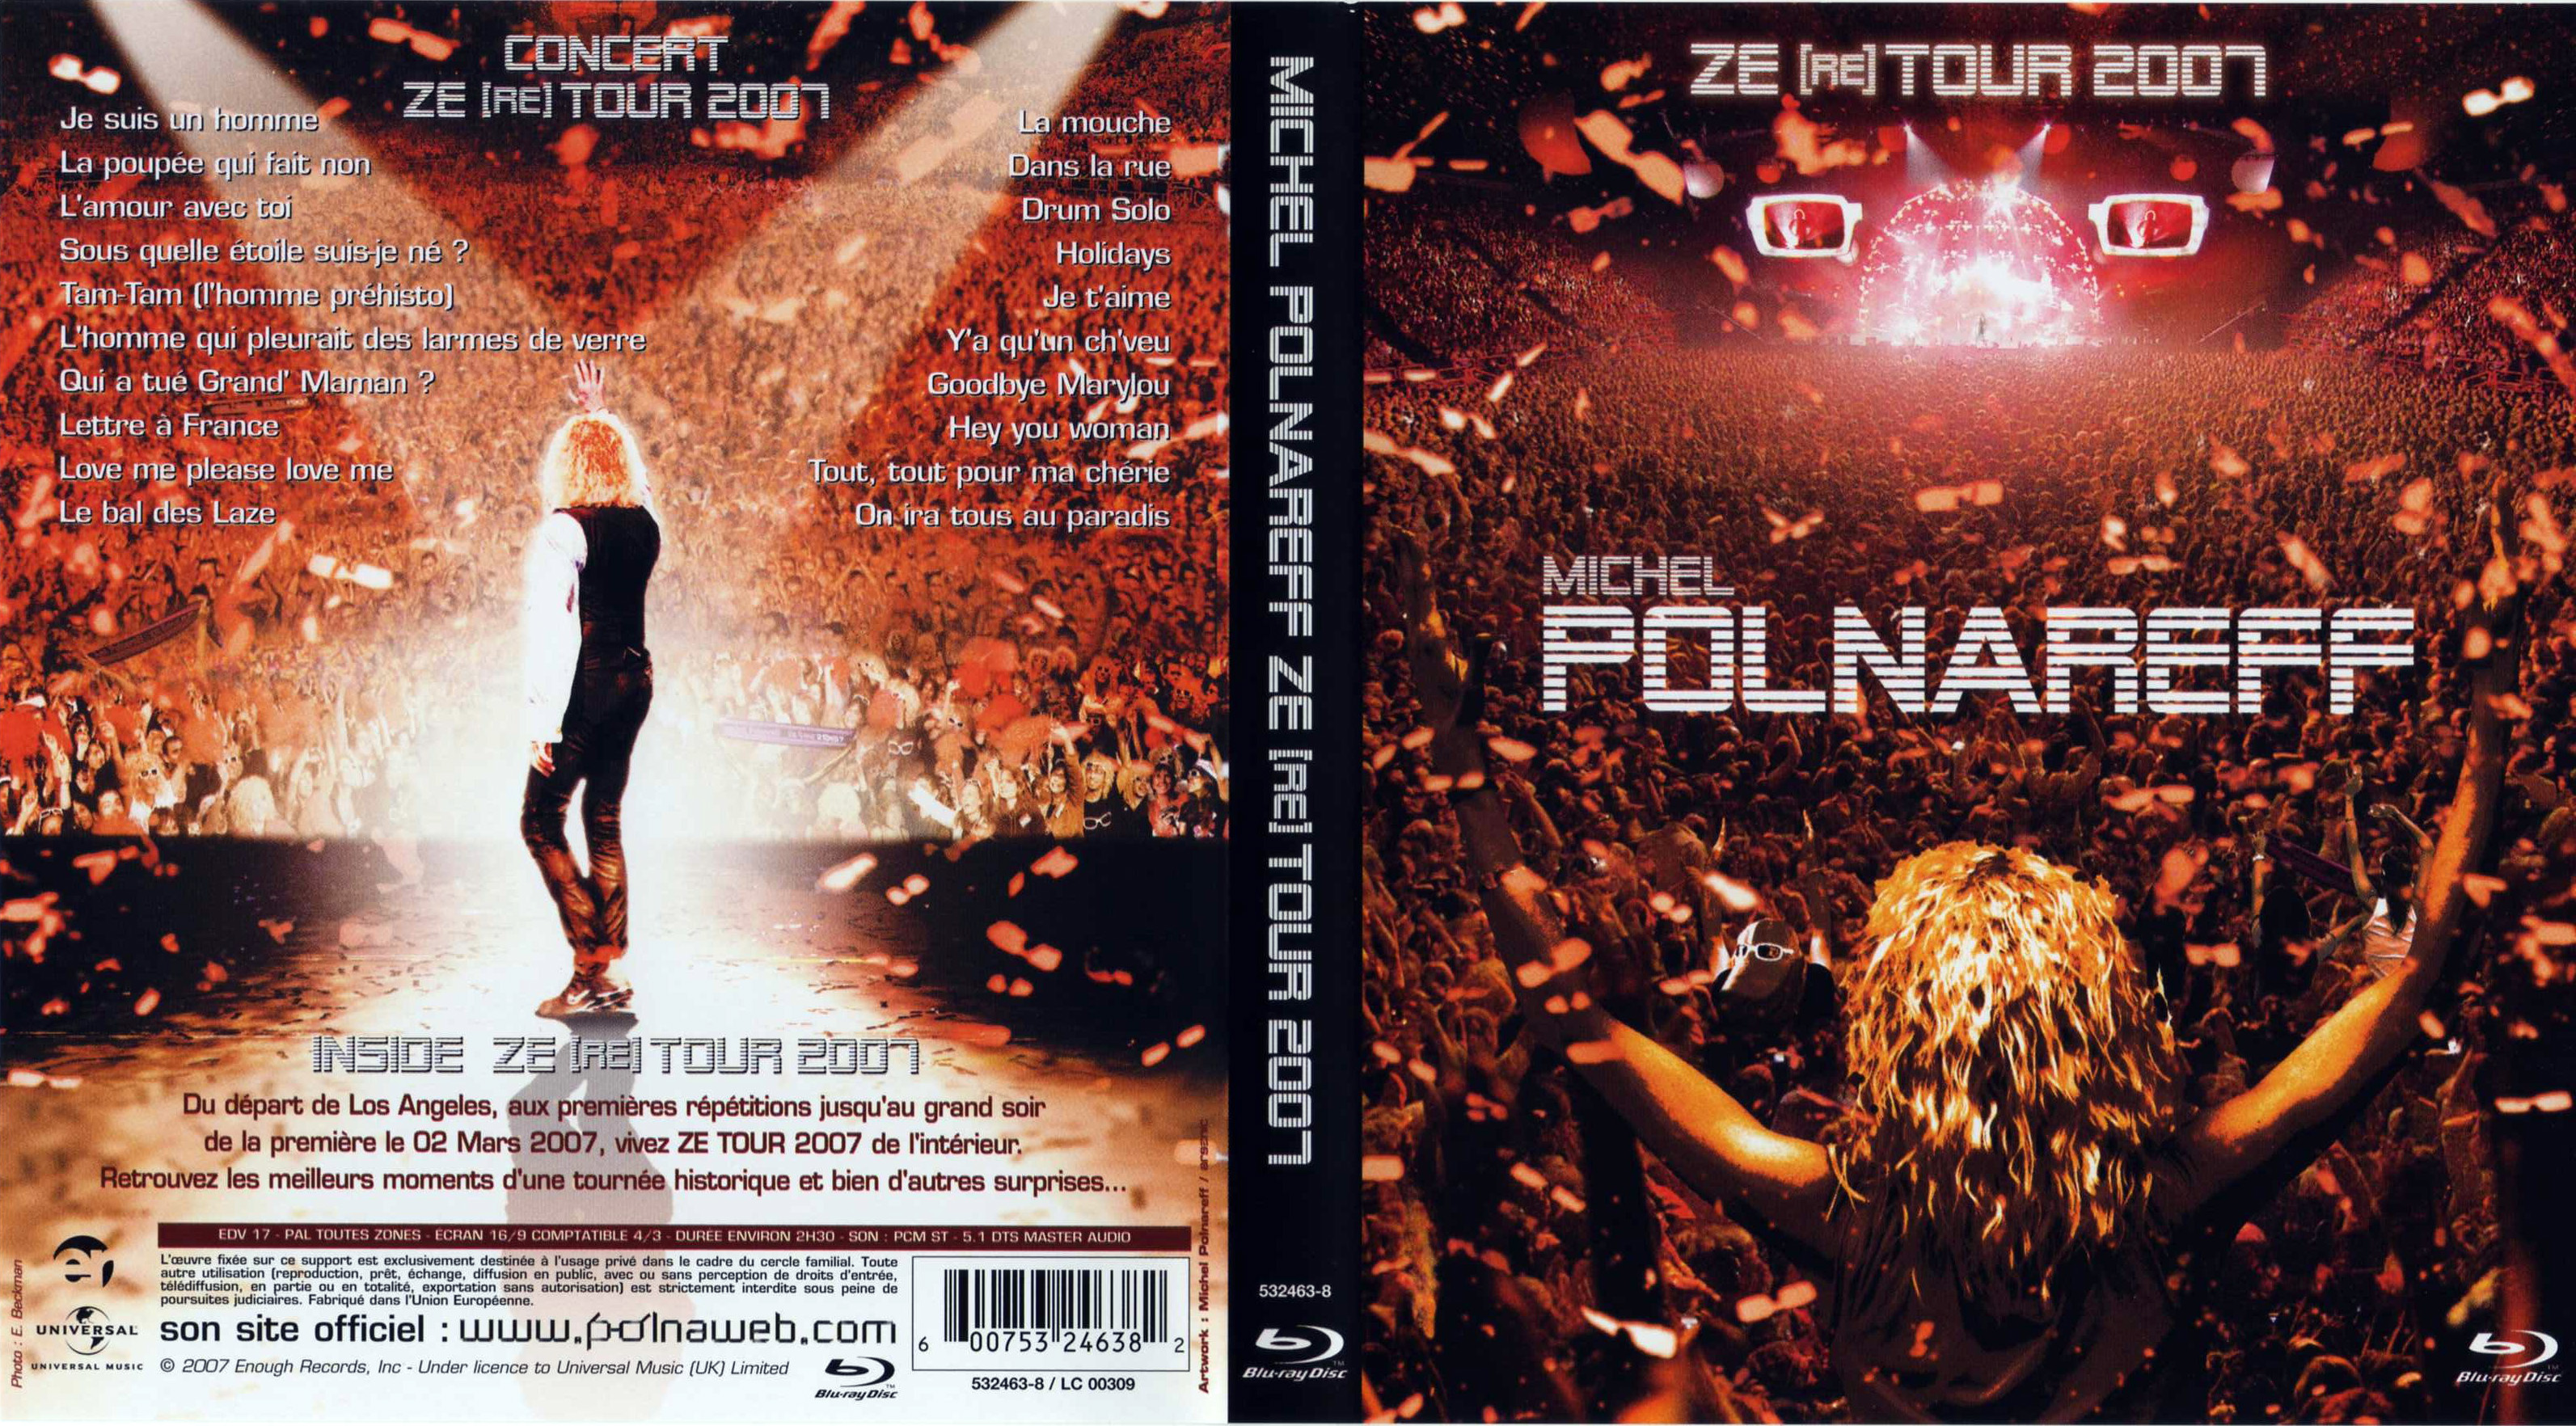 Jaquette DVD Michel Polnareff Ze (re) tour 2007 (BLU-RAY)